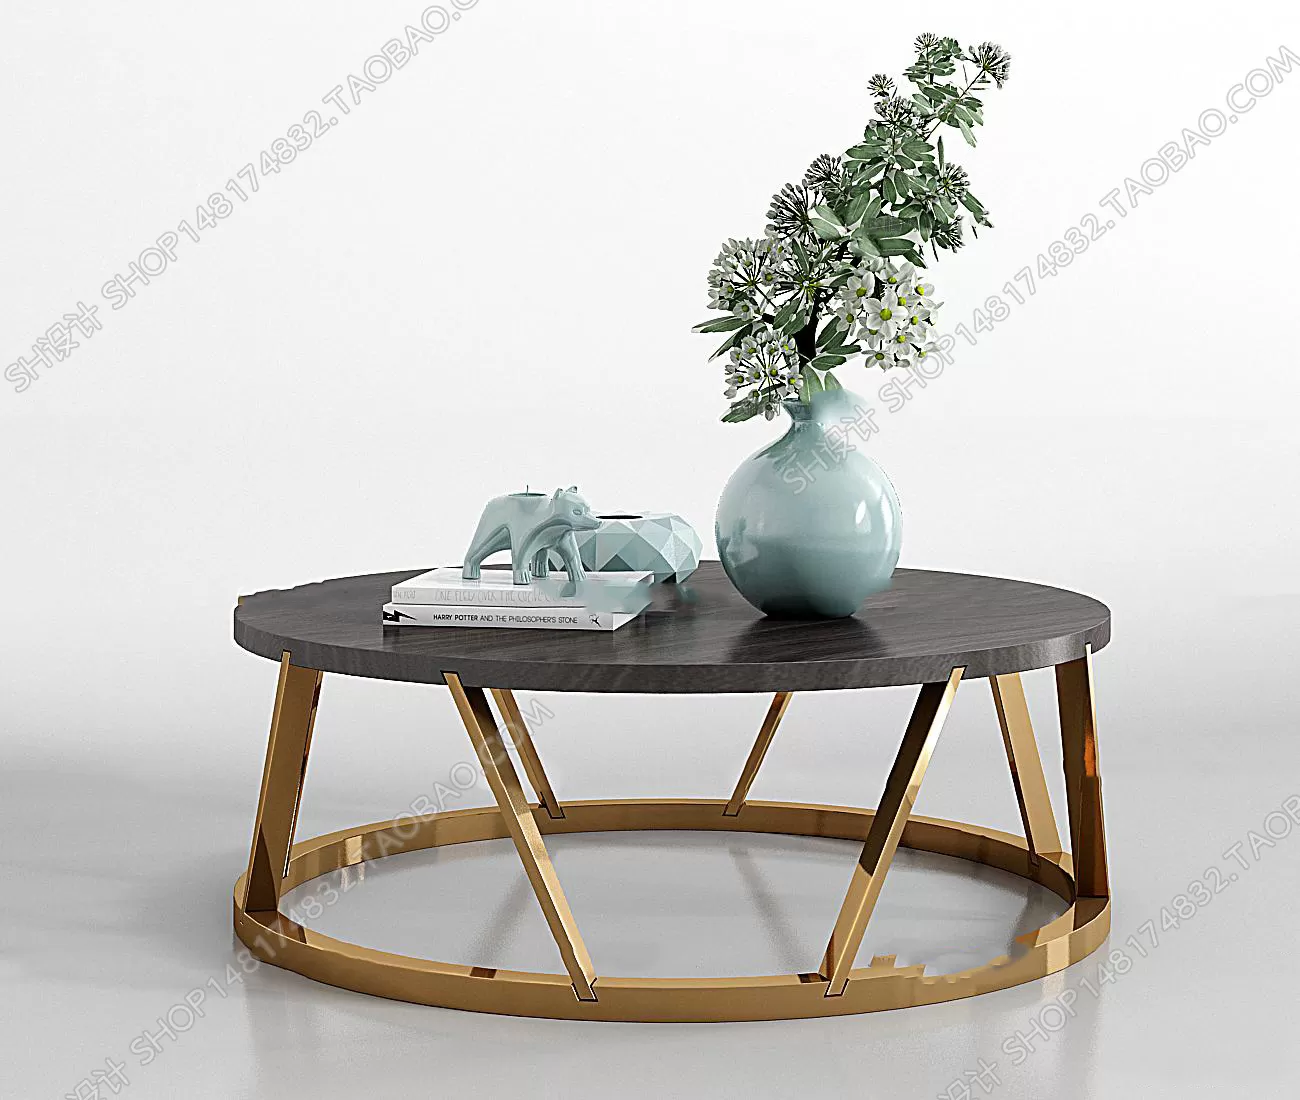 3DSKY MODELS – COFFEE TABLE 3D MODELS – 022